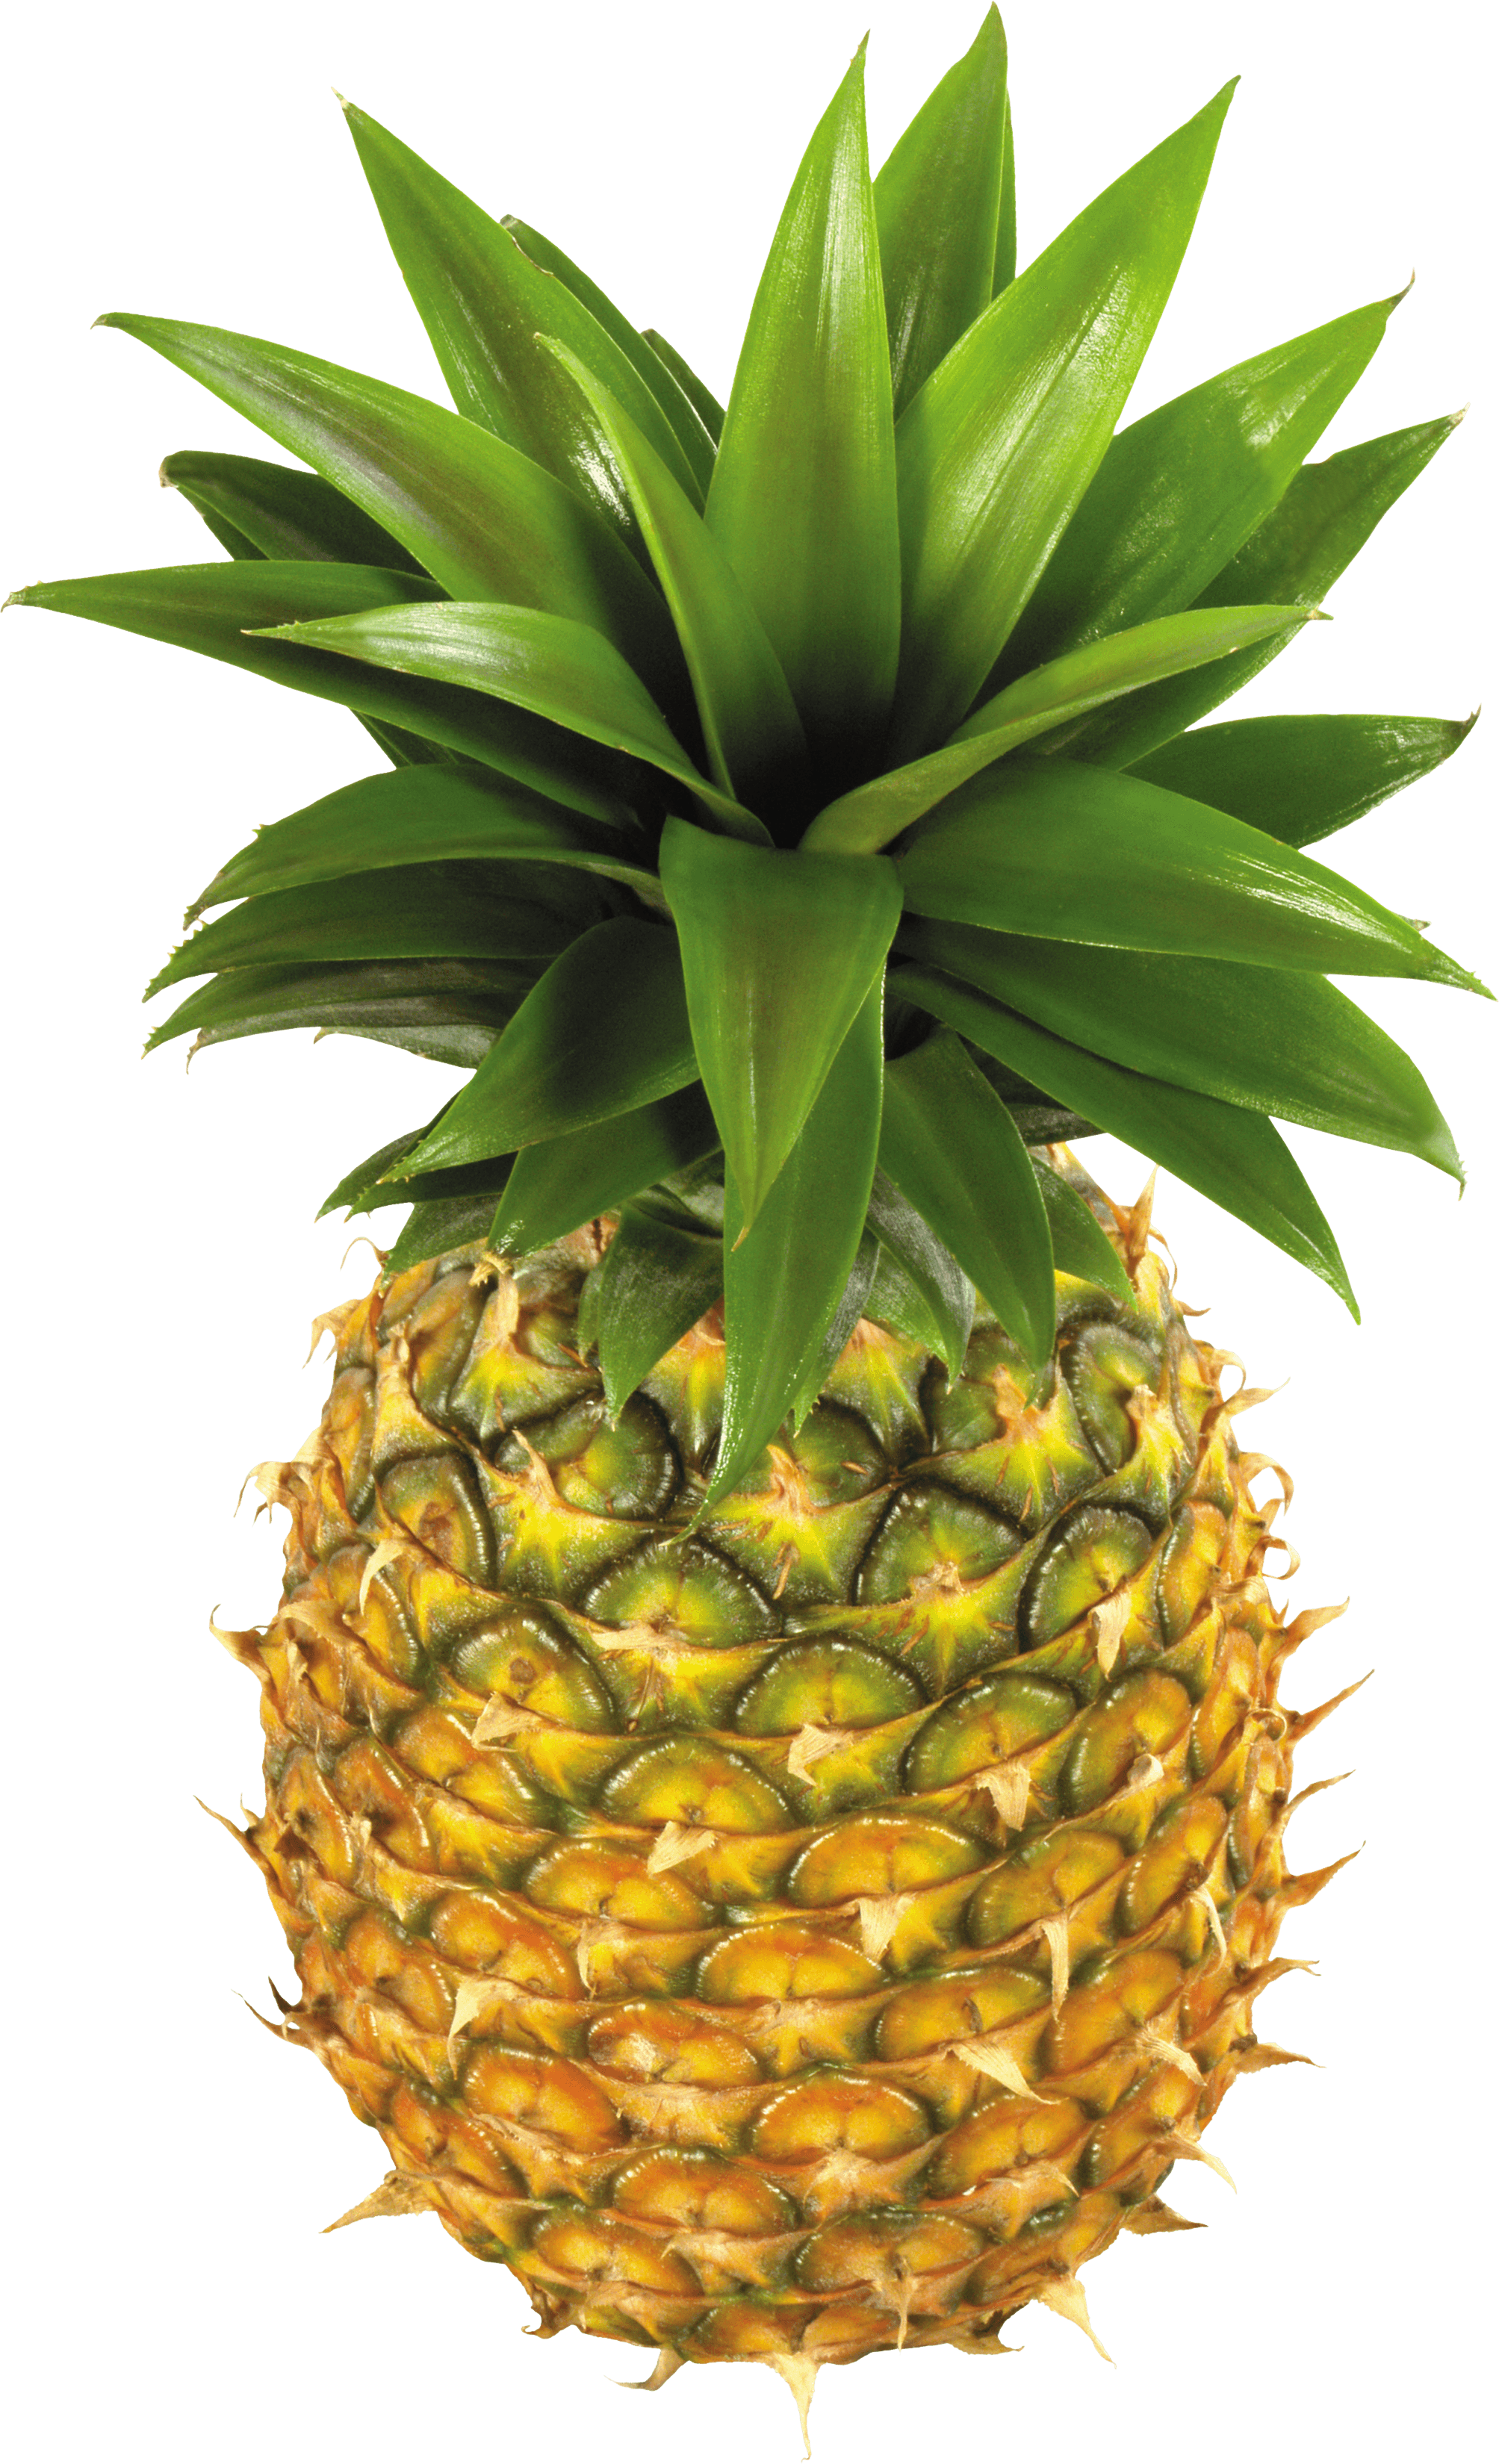 Download Pineapple Fruit Png Image HQ PNG Image | FreePNGImg